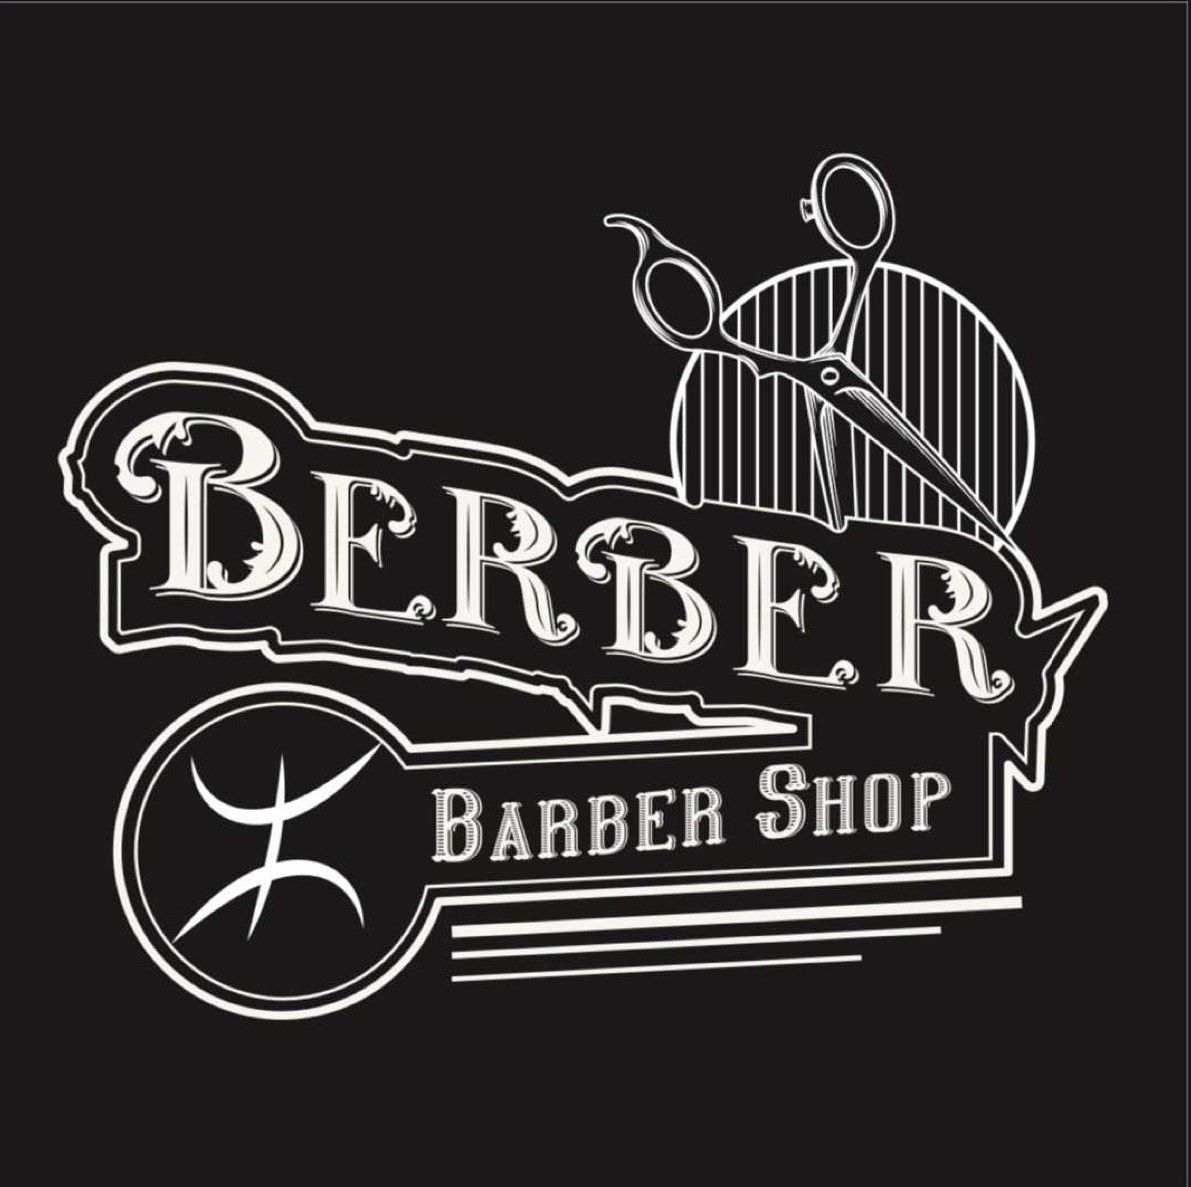 Berber barbershop, 878 Bush St, San Francisco, 94108